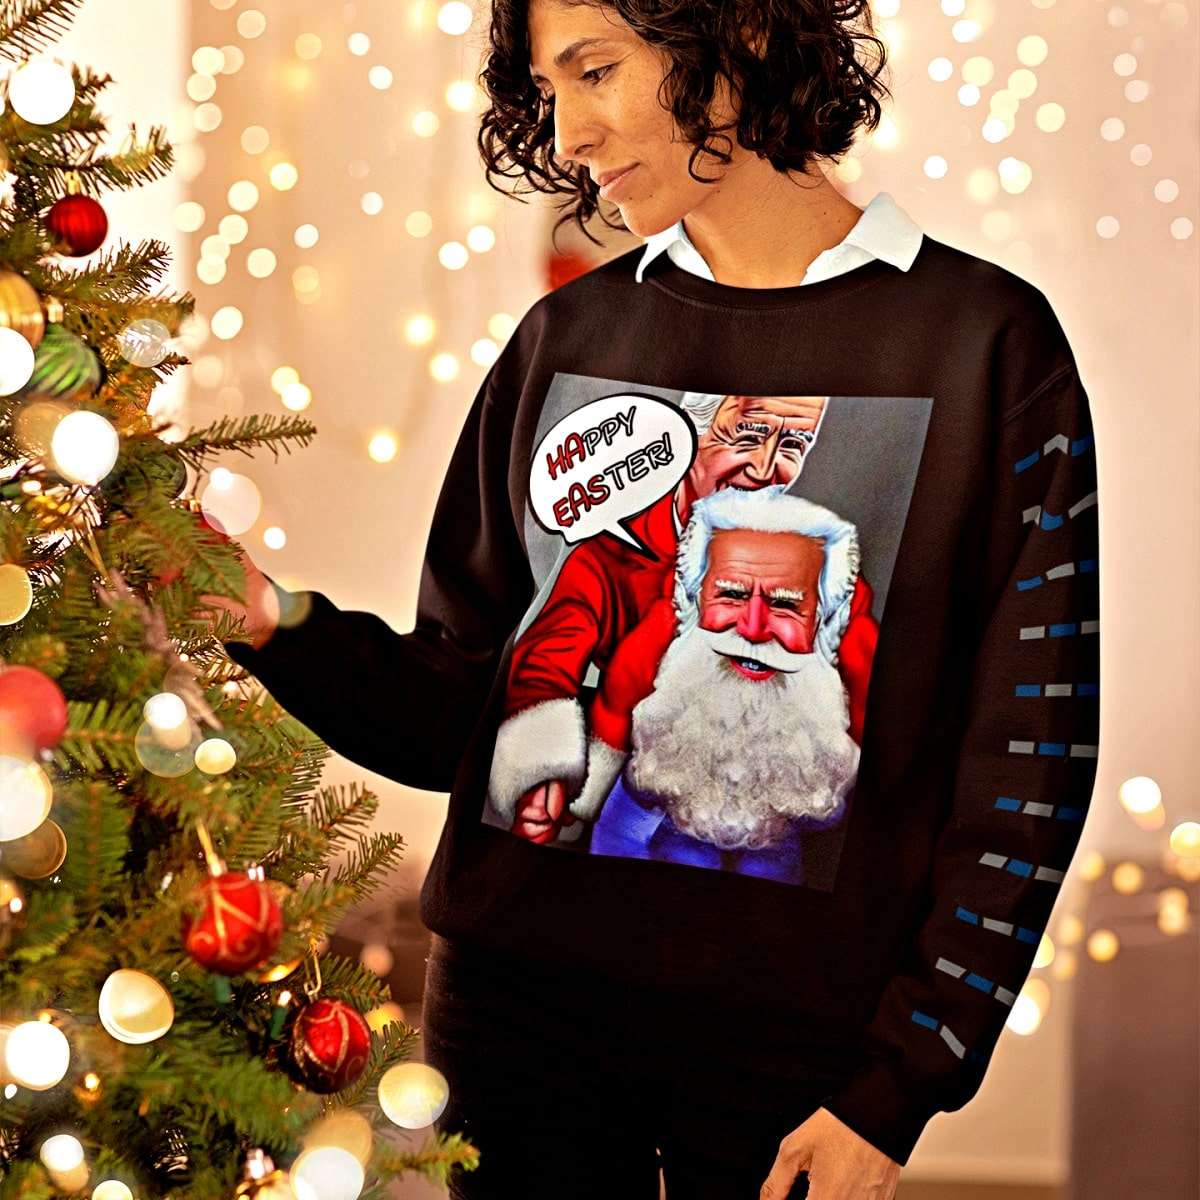 HAPPY EASTER Joe Biden Funny Christmas Sweater - Santaland